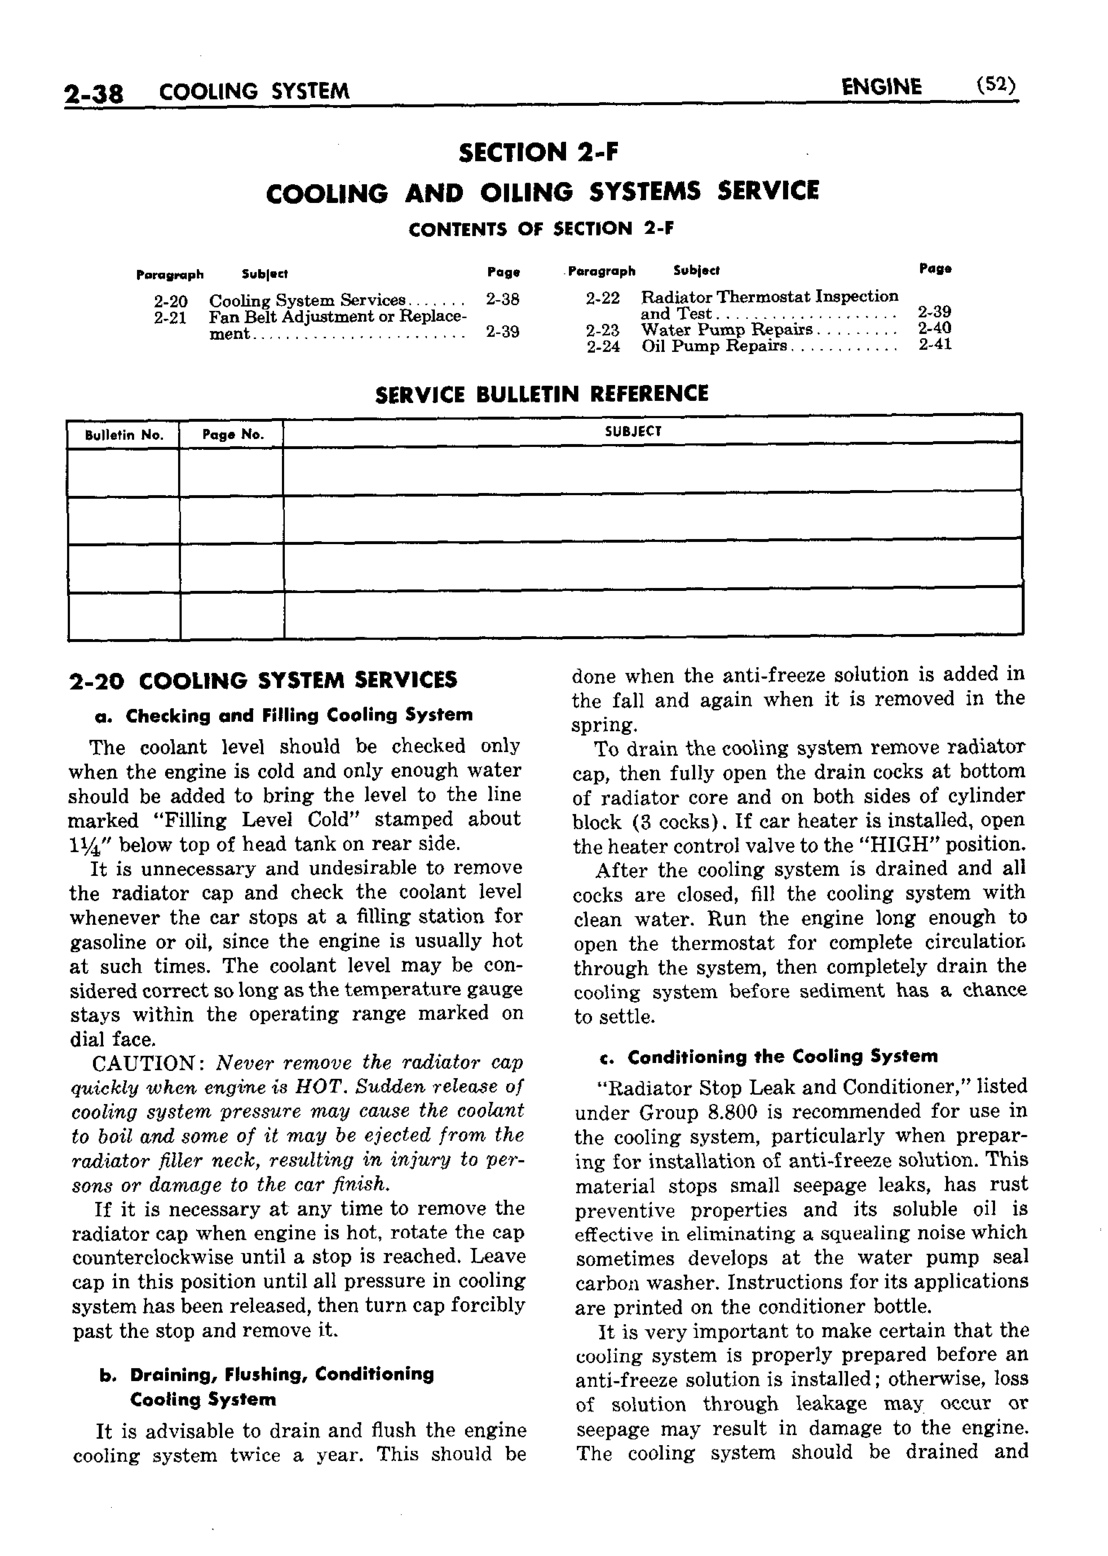 n_03 1953 Buick Shop Manual - Engine-038-038.jpg